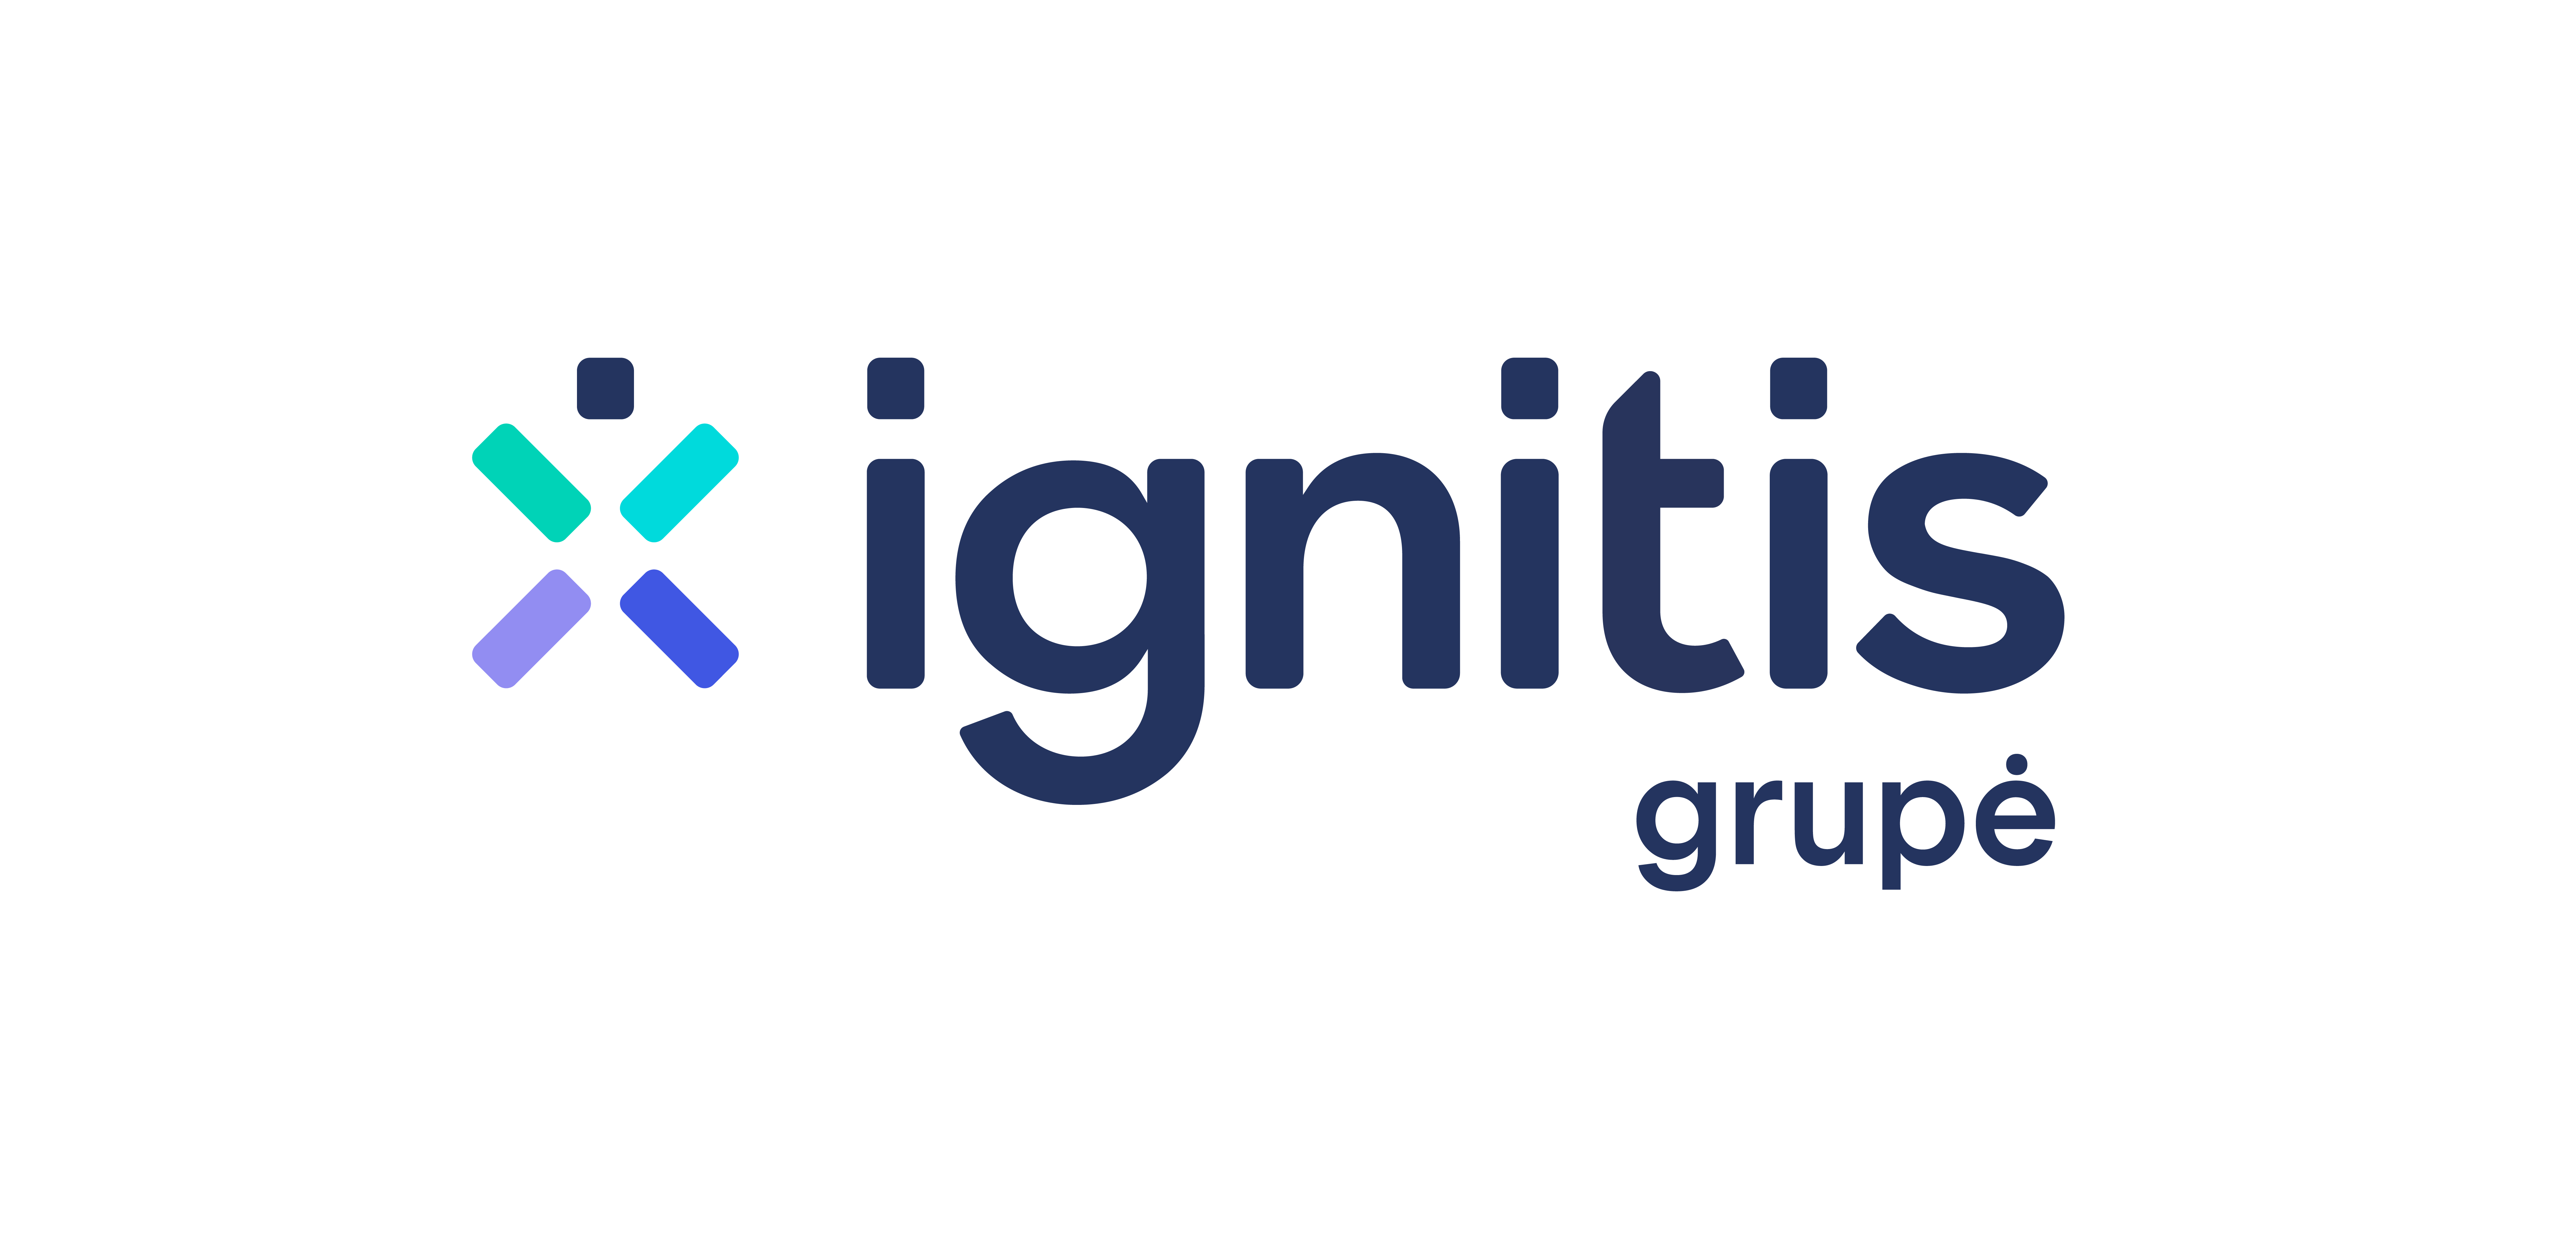 Ignitis group